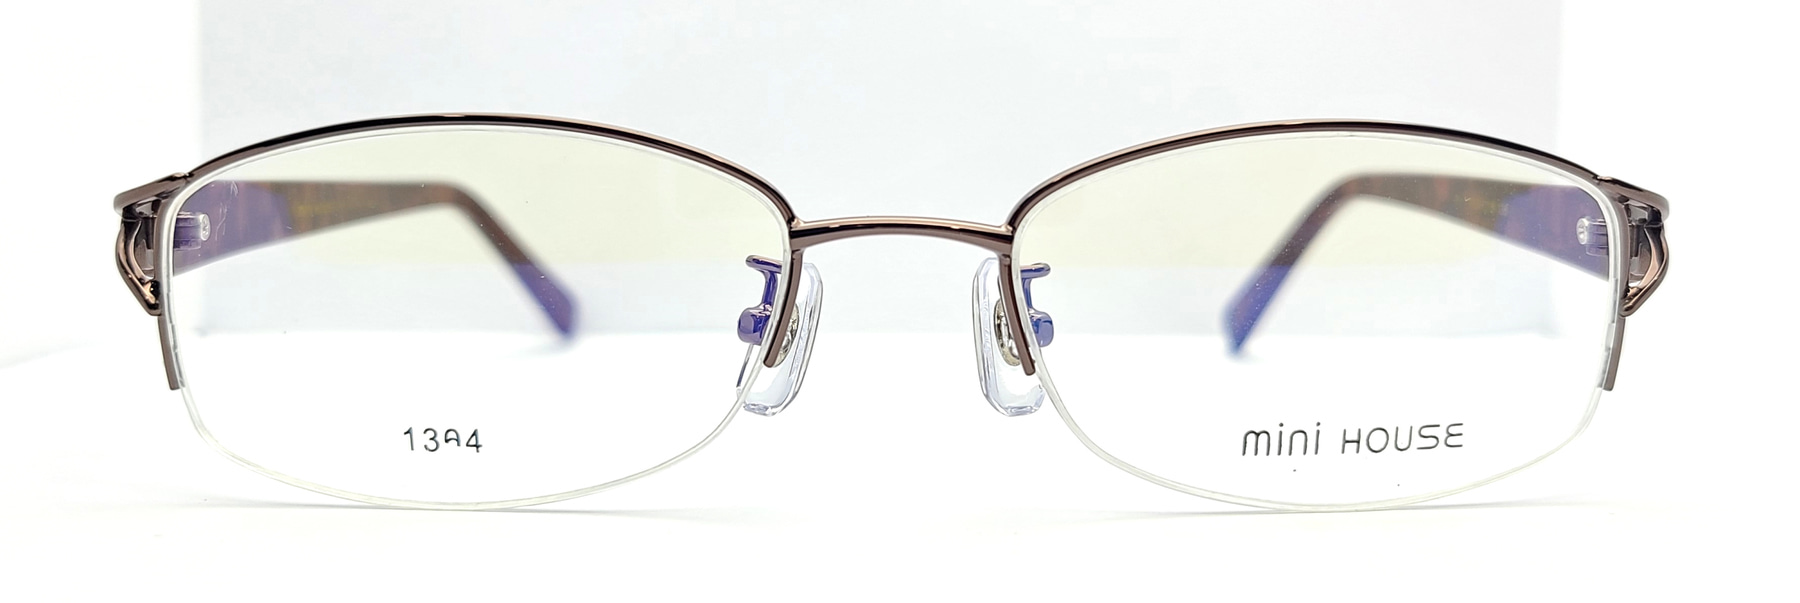 MINIHOUSE M-1304, Korean glasses, sunglasses, eyeglasses, glasses